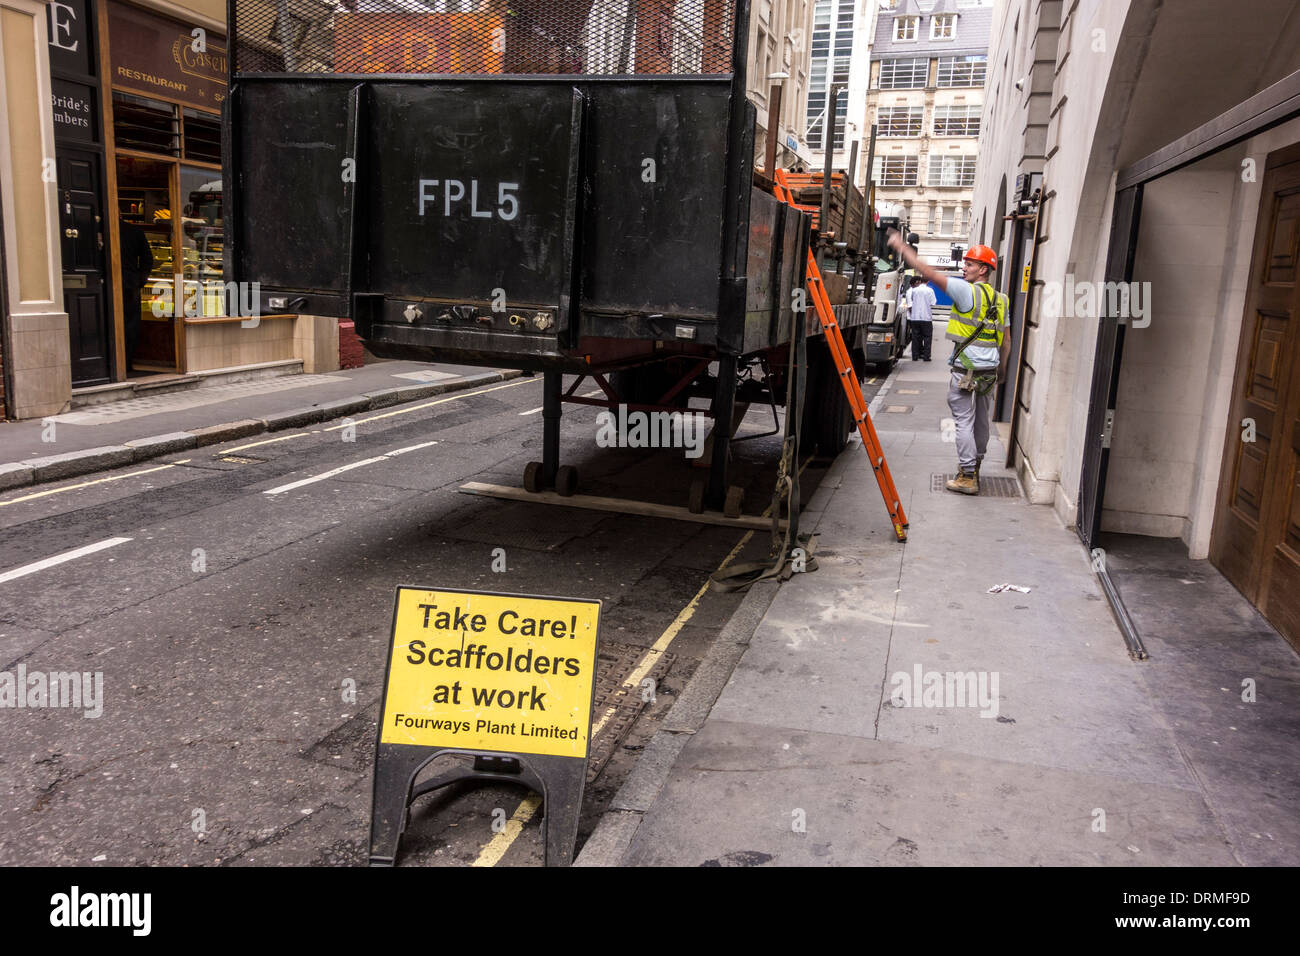 Scaffolders' safety warning sign on street, London, UK Stock Photo